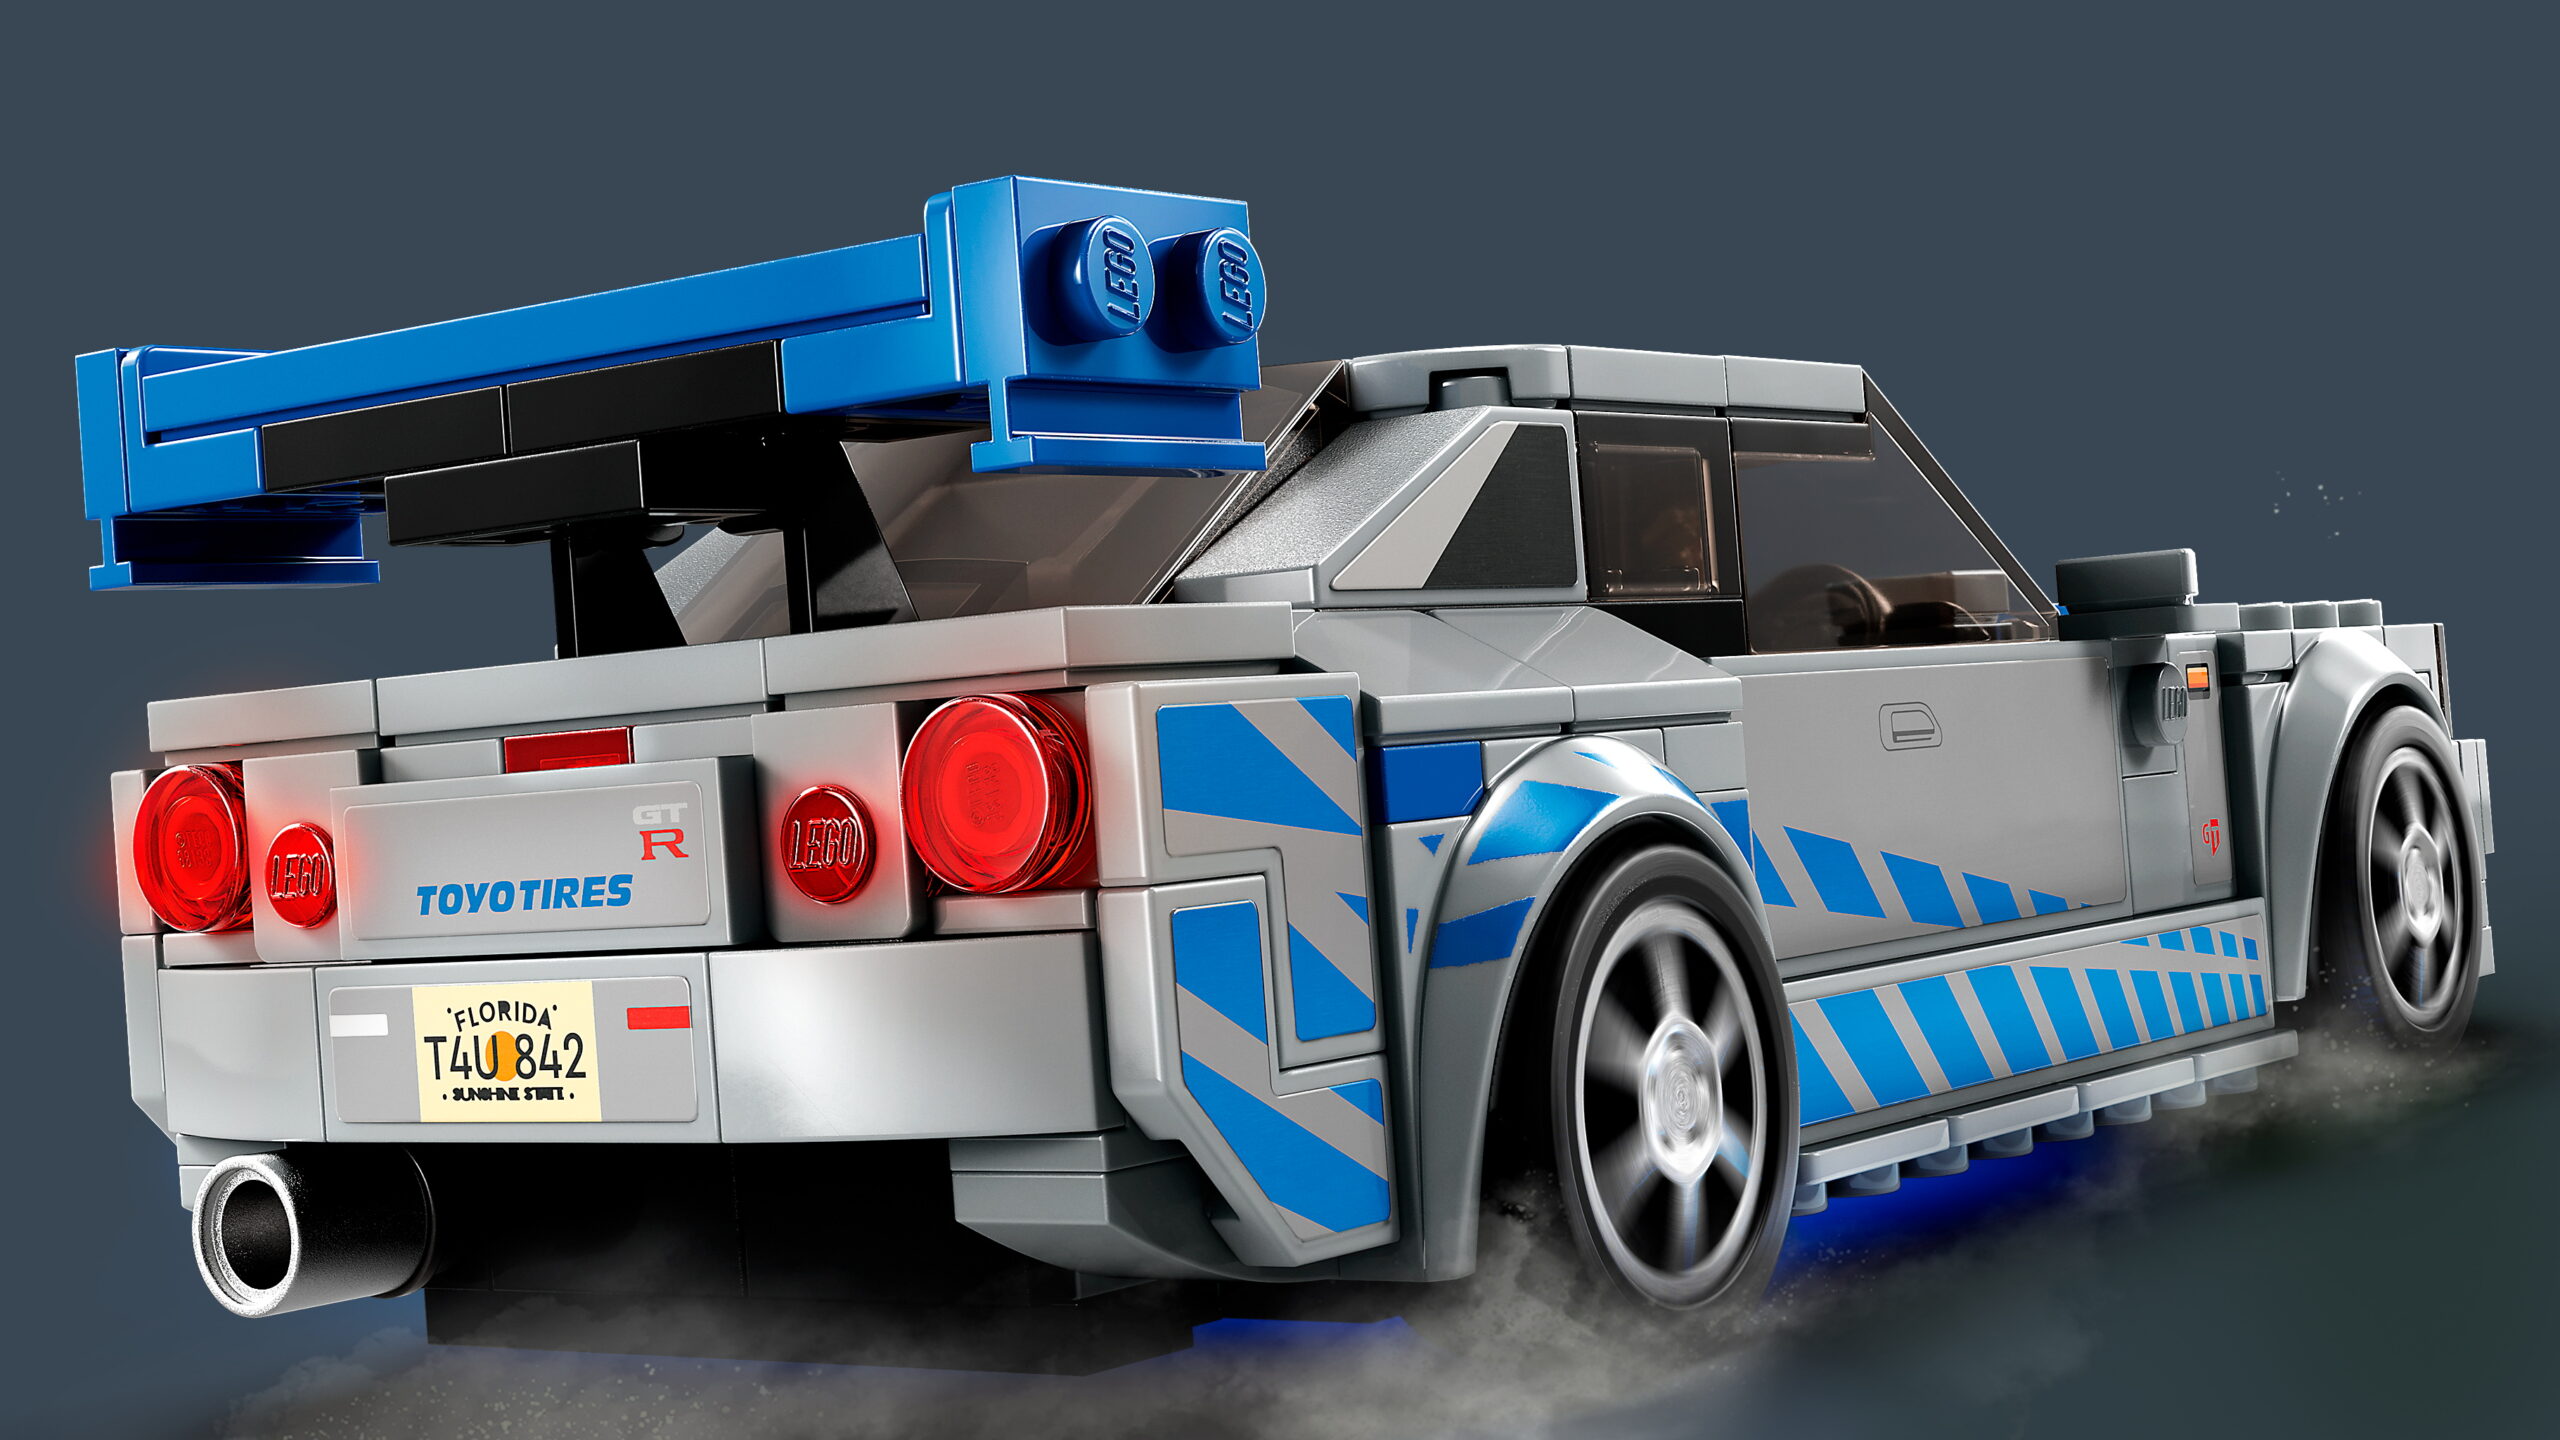 Nouveauté LEGO Speed Champions 76917 2 Fast 2 Furious Nissan Skyline GT-R -  HelloBricks